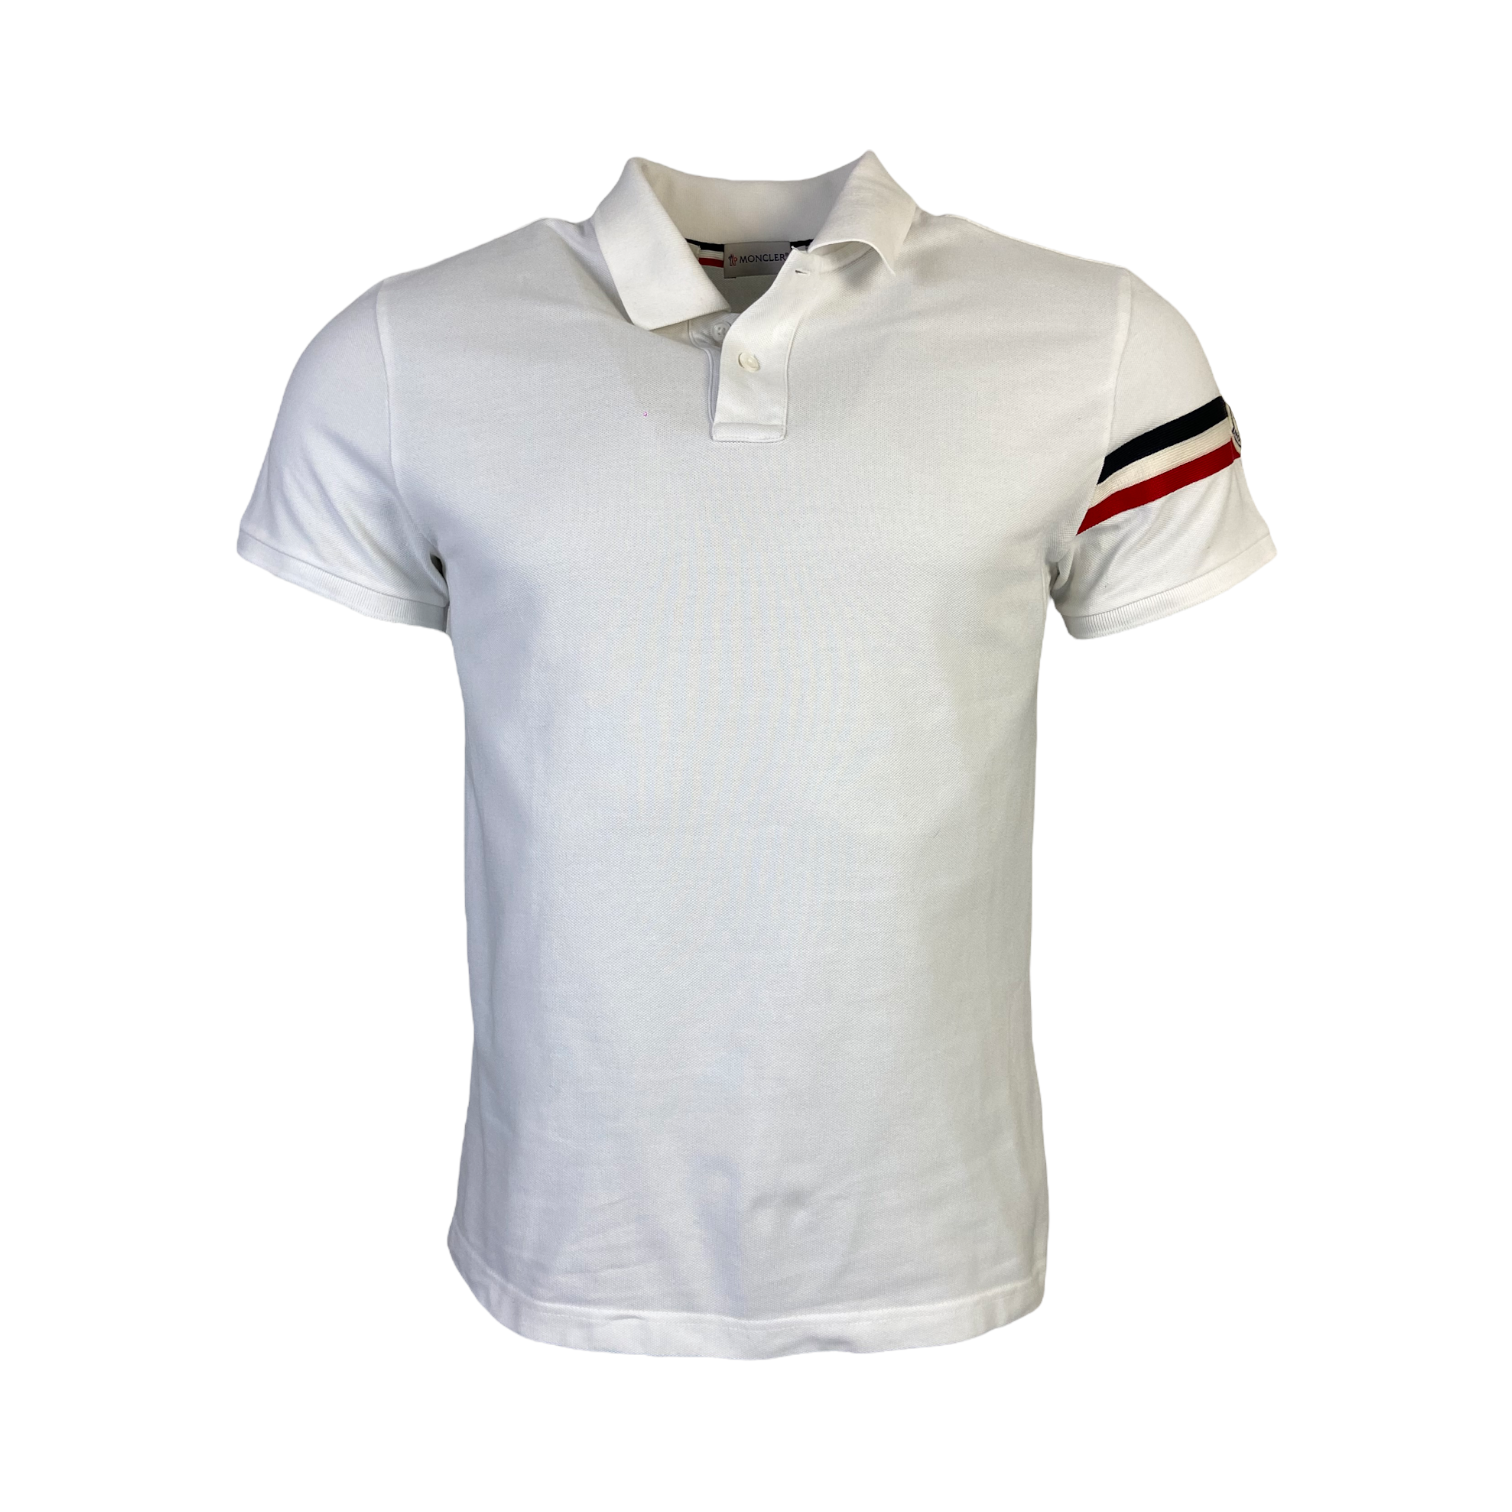 Moncler Polo Shirt - Size L (Fits M)